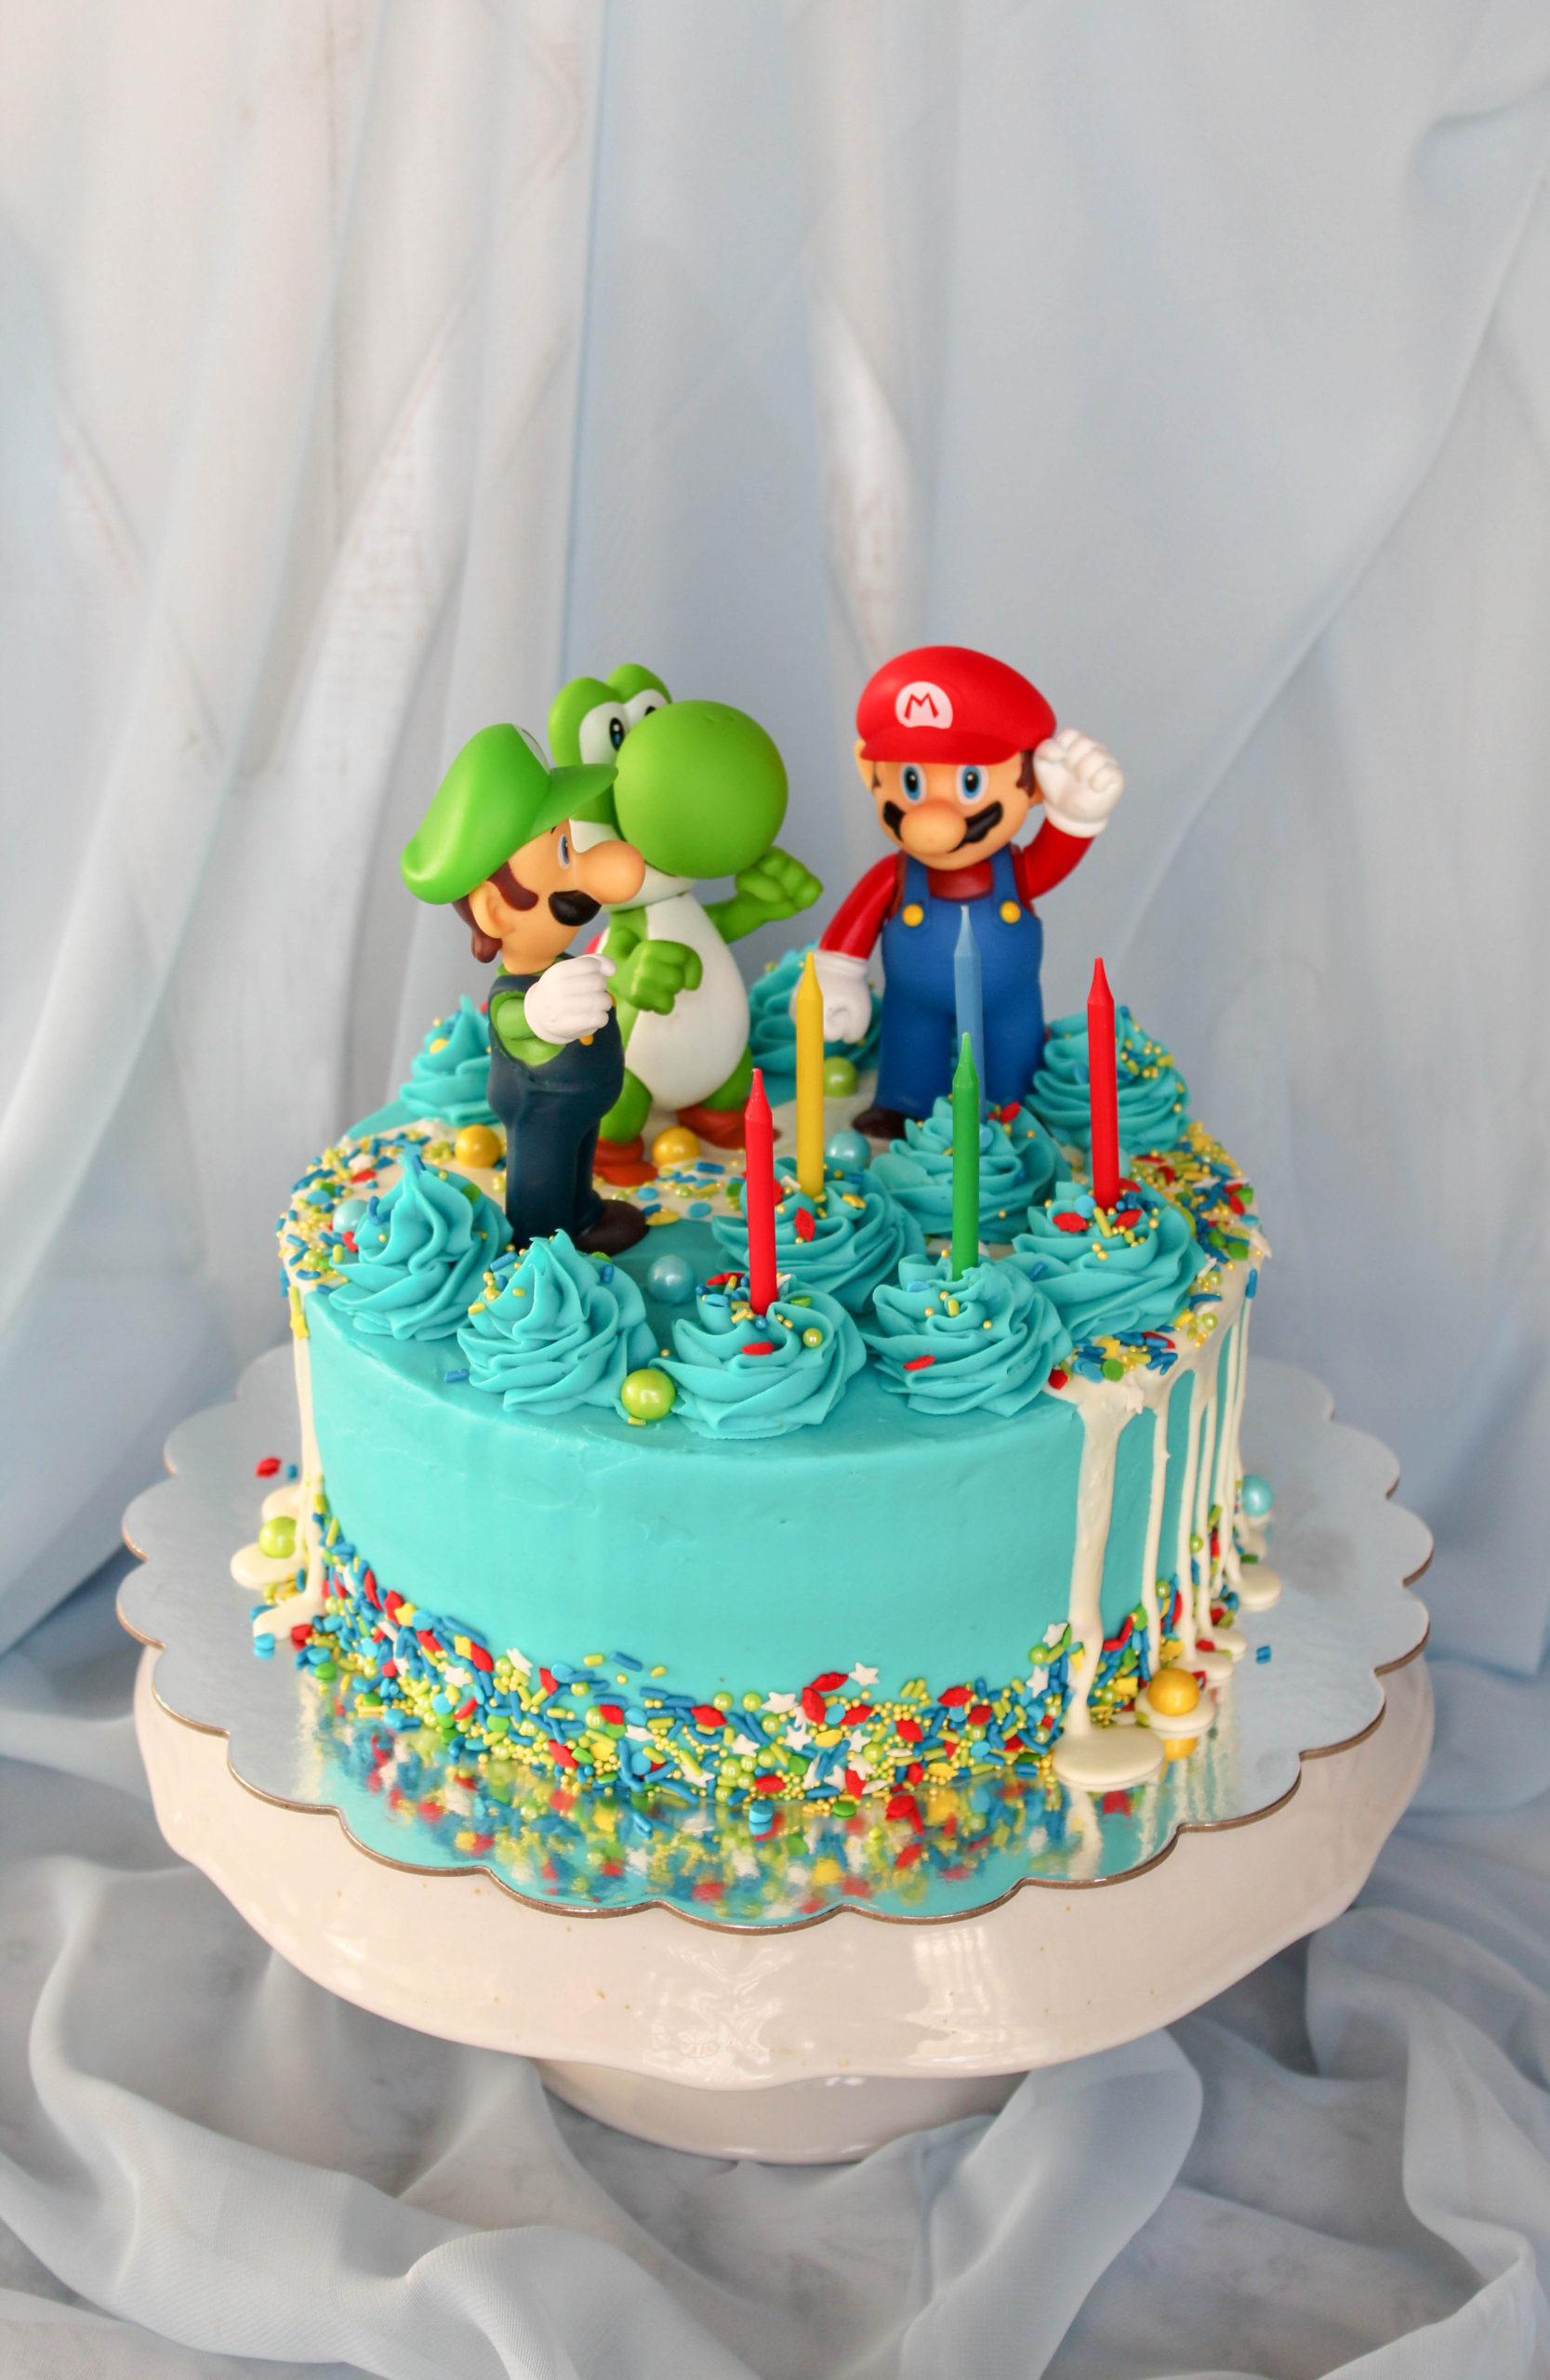 Amazon.com: Mario Brothers 23 Piece Birthday Cake Topper Set Featuring  Mario Castle, Bomb, Mario Coins, 6 Mario Figures Including Mario, Luigi,  Princess Peach, Toad, Yoshi, Donkey Kong, and 12 Mario 1